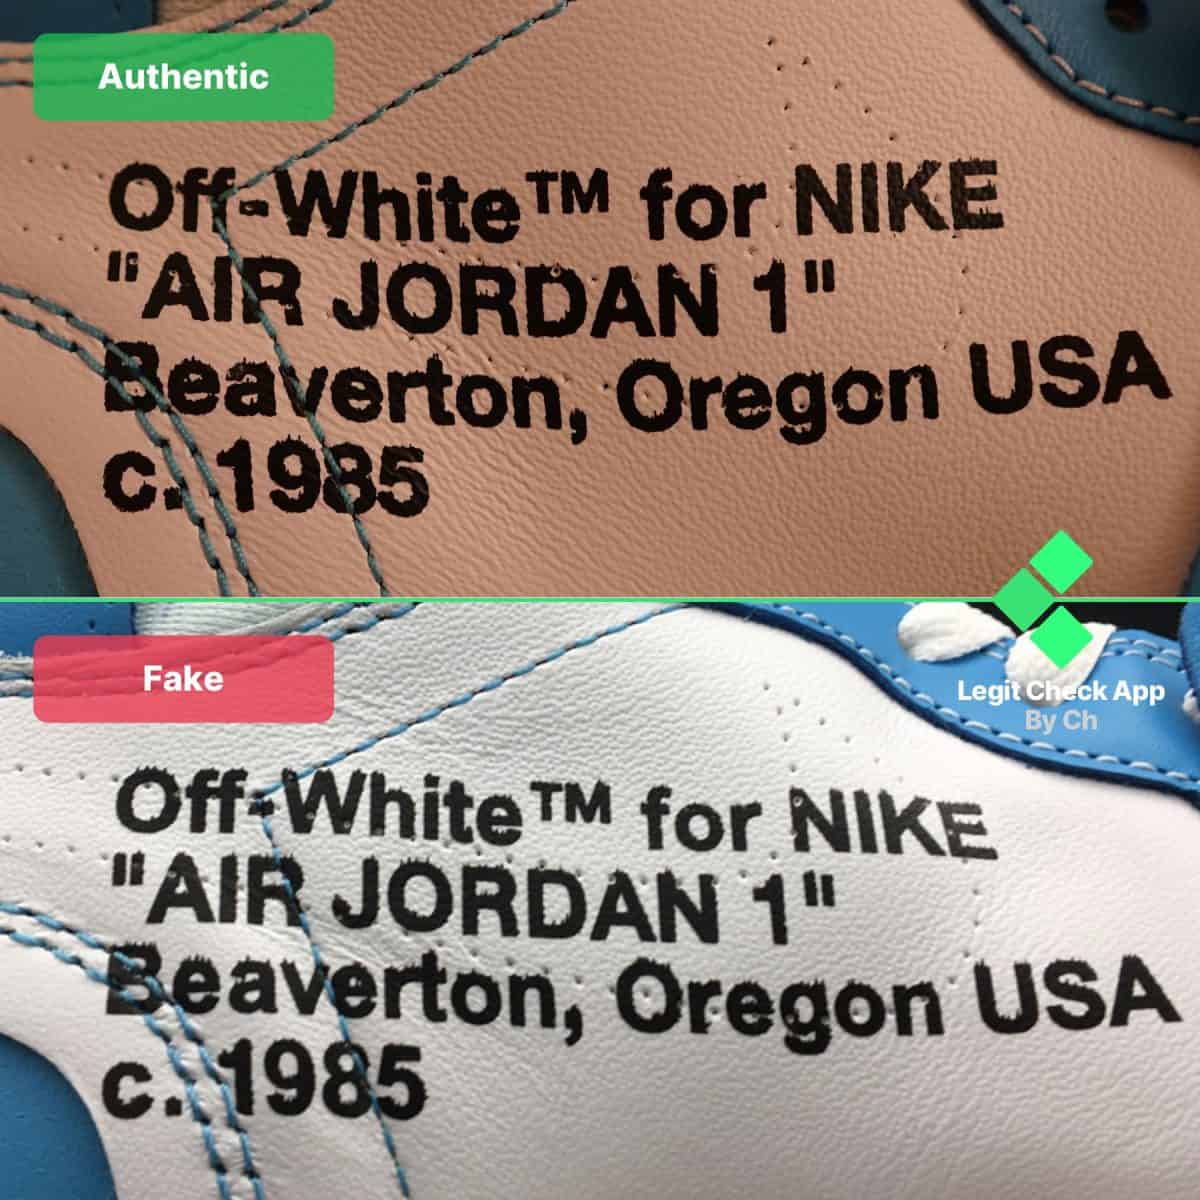 How To Spot Fake Off-White Air Jordan 1 UNC